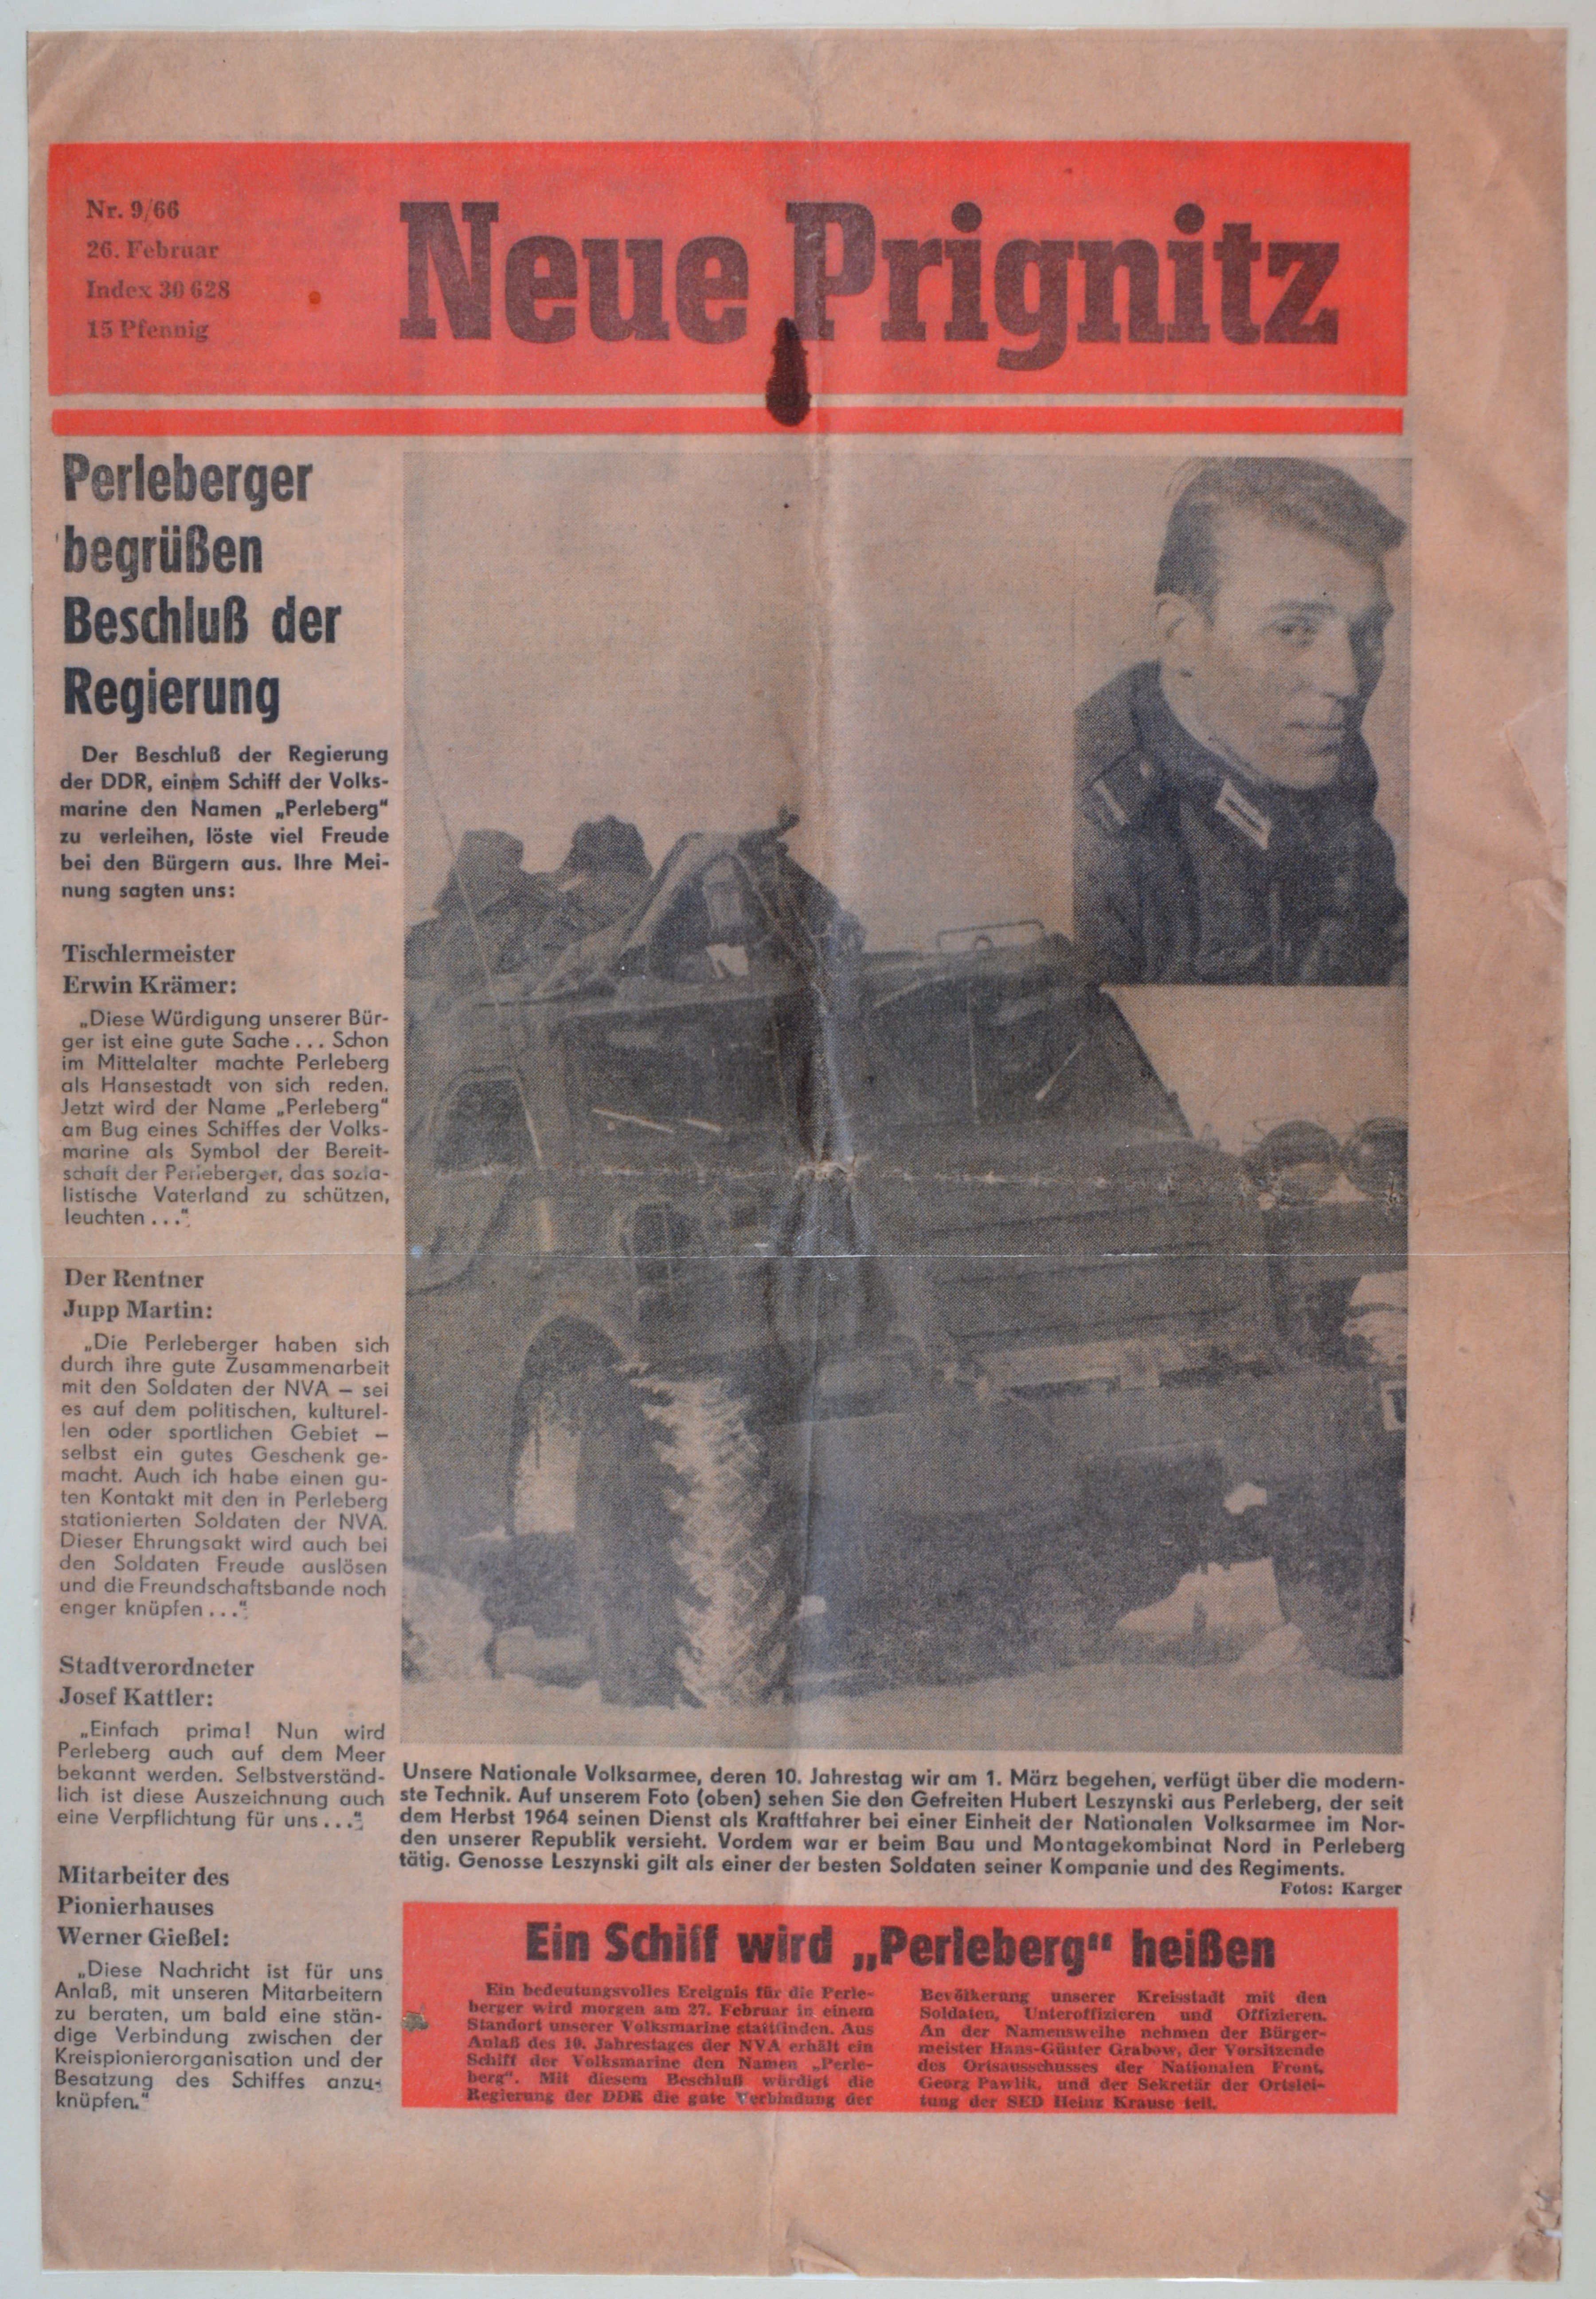 "Neue Prignitz" vom 26. Februar 1966, Nr. 9 (DDR Geschichtsmuseum im Dokumentationszentrum Perleberg CC BY-SA)